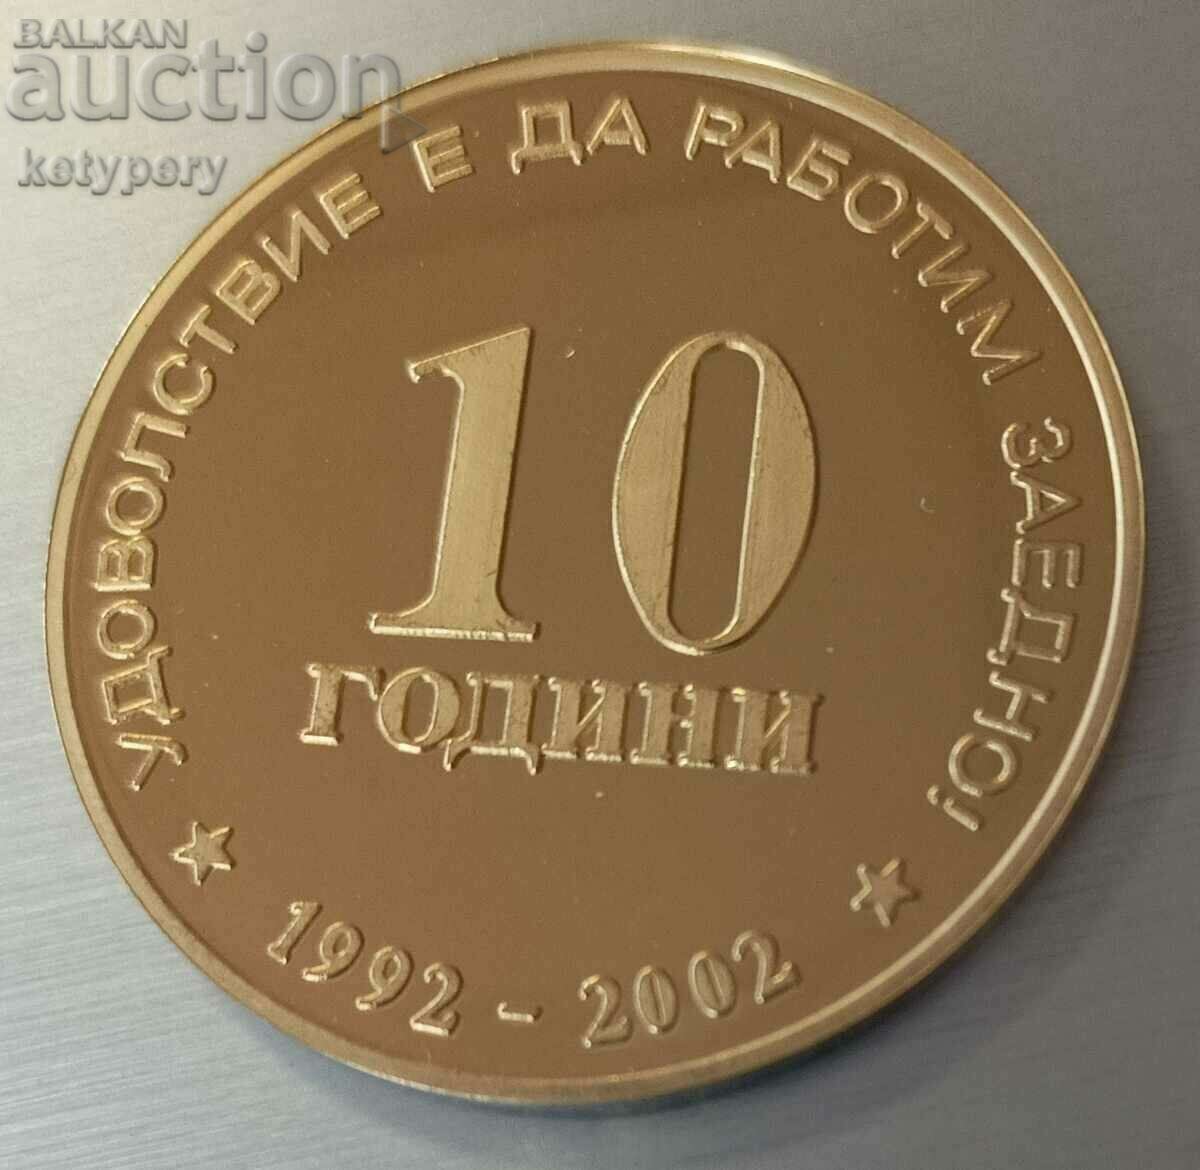 10 years Unionbank - Commemorative medal